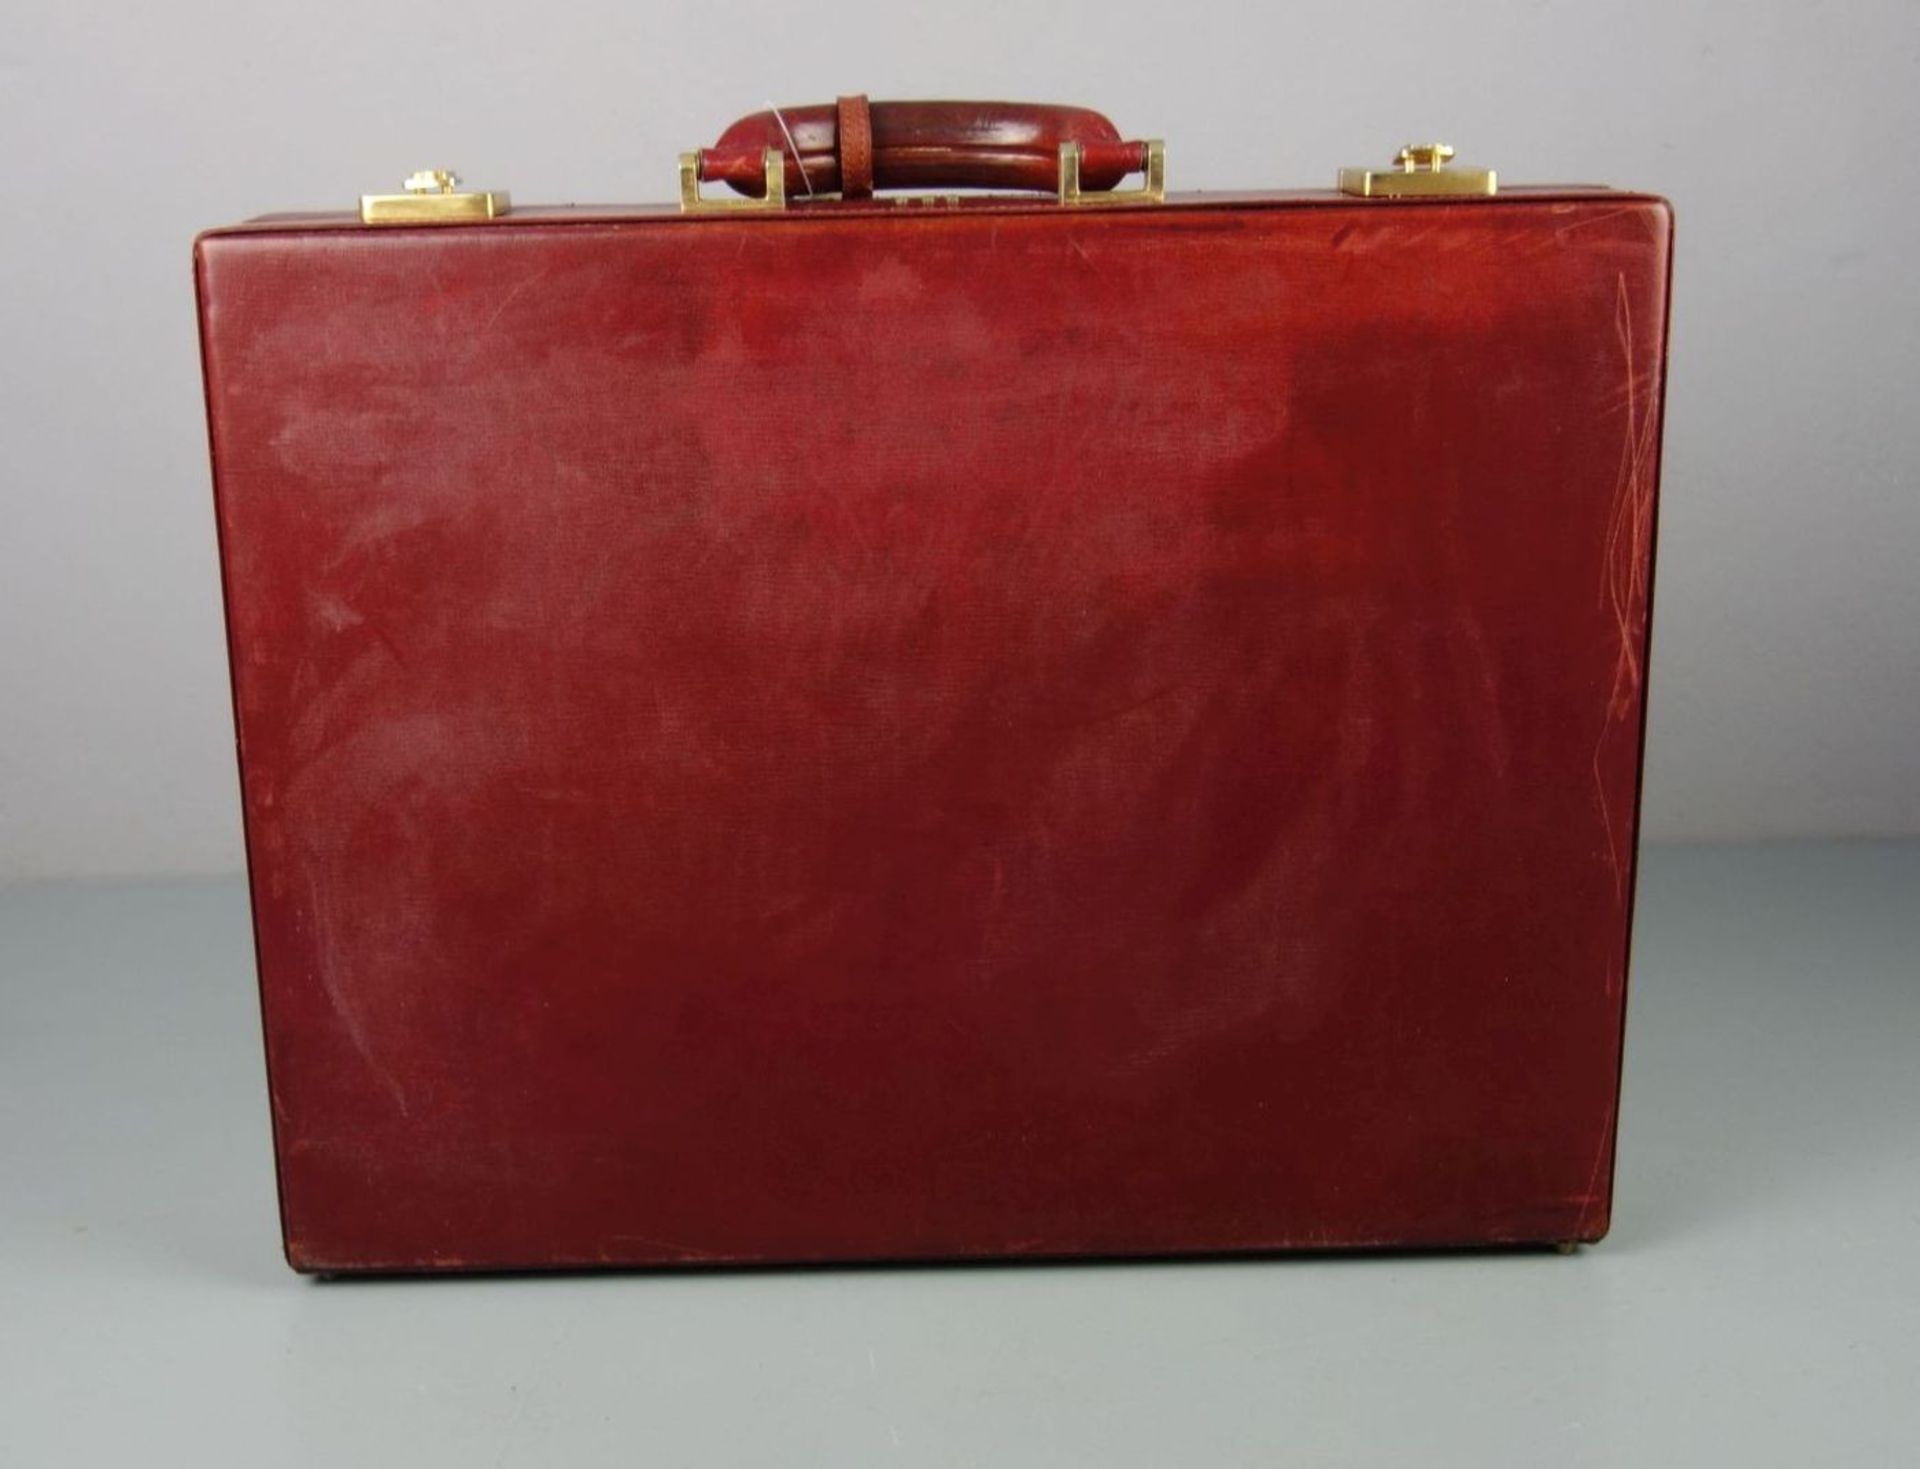 ROTER MÄDLER AKTENKOFFER / red leather briefcase, 2. H. 20. Jh., rotes Leder mit goldfarbenen - Bild 6 aus 6